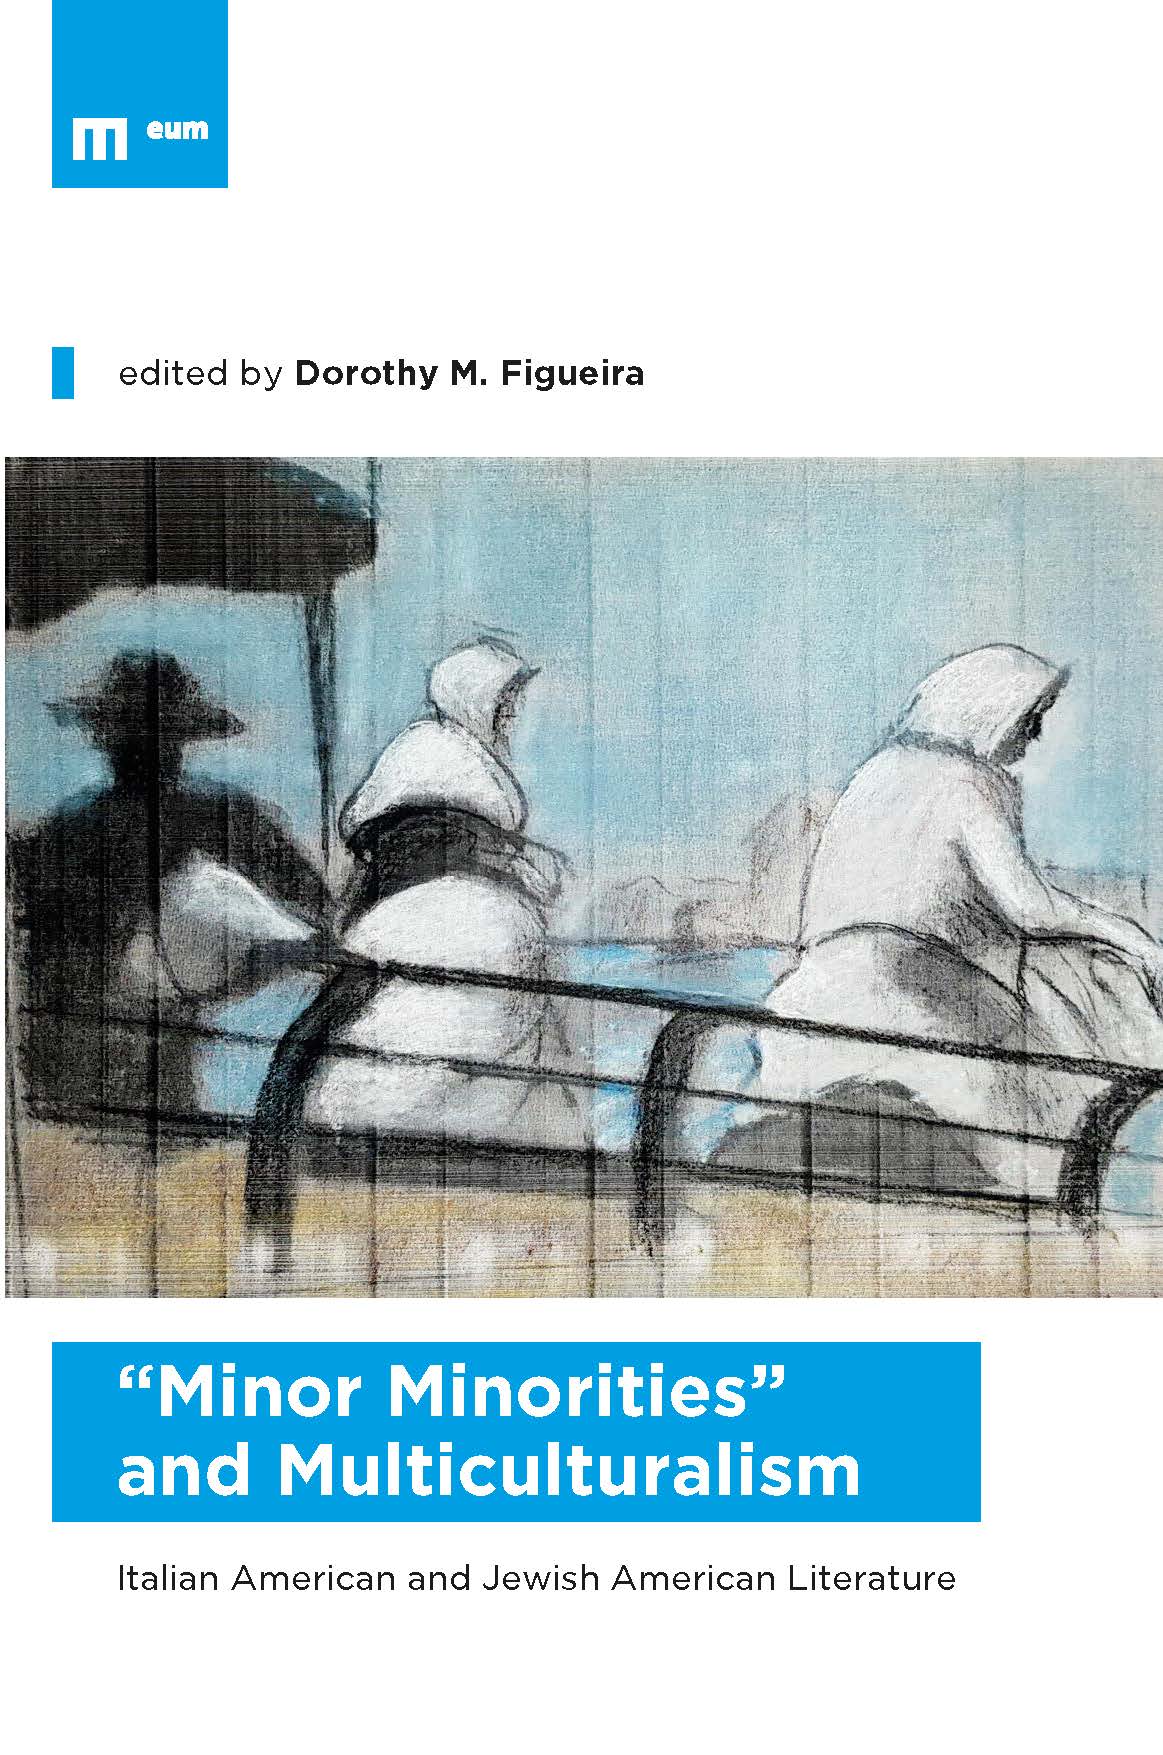 "Minor minorities" and Multiculturalism